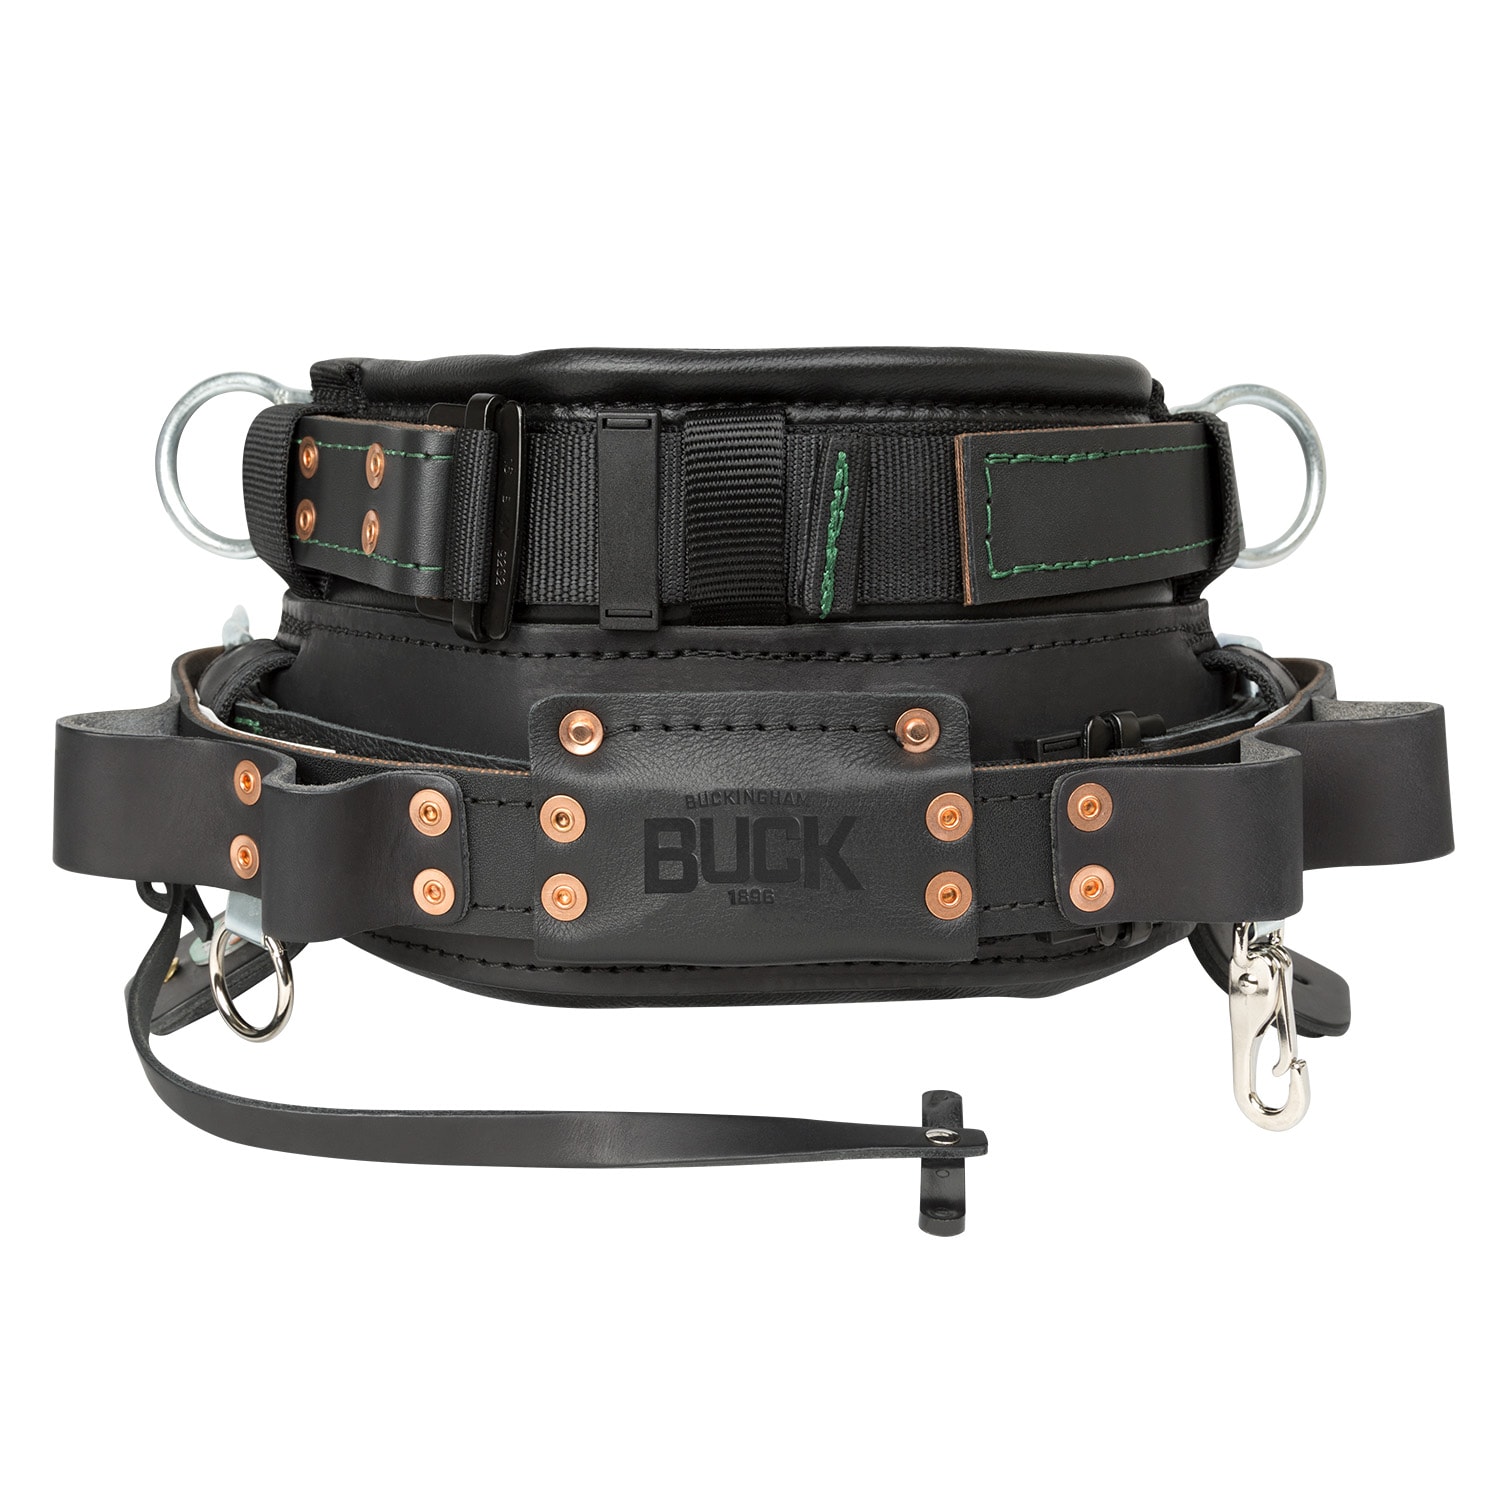 Buckingham Revolutionary Patented Adjustable 4 D-Ring Body Belt